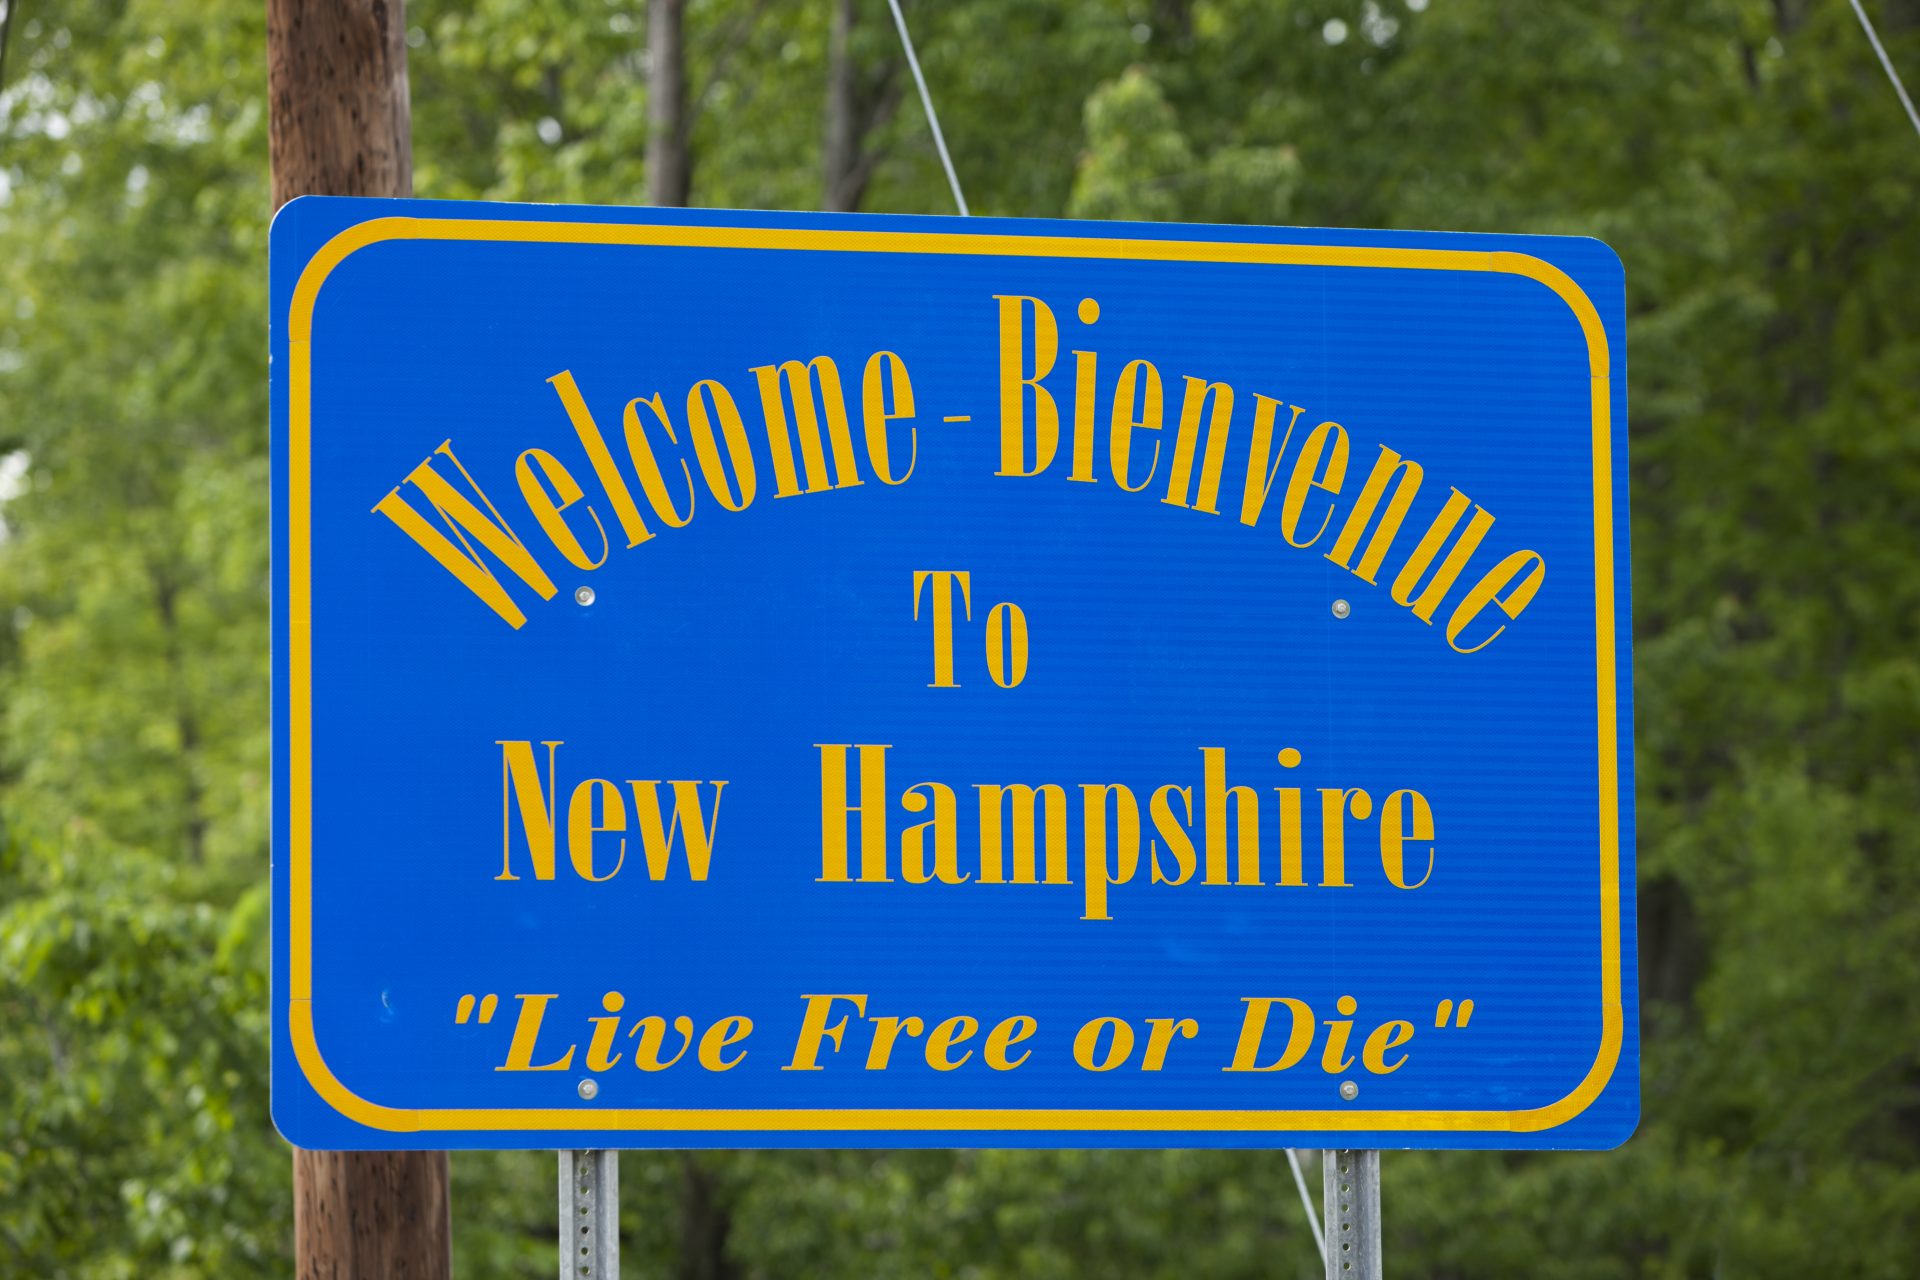 7. New Hampshire